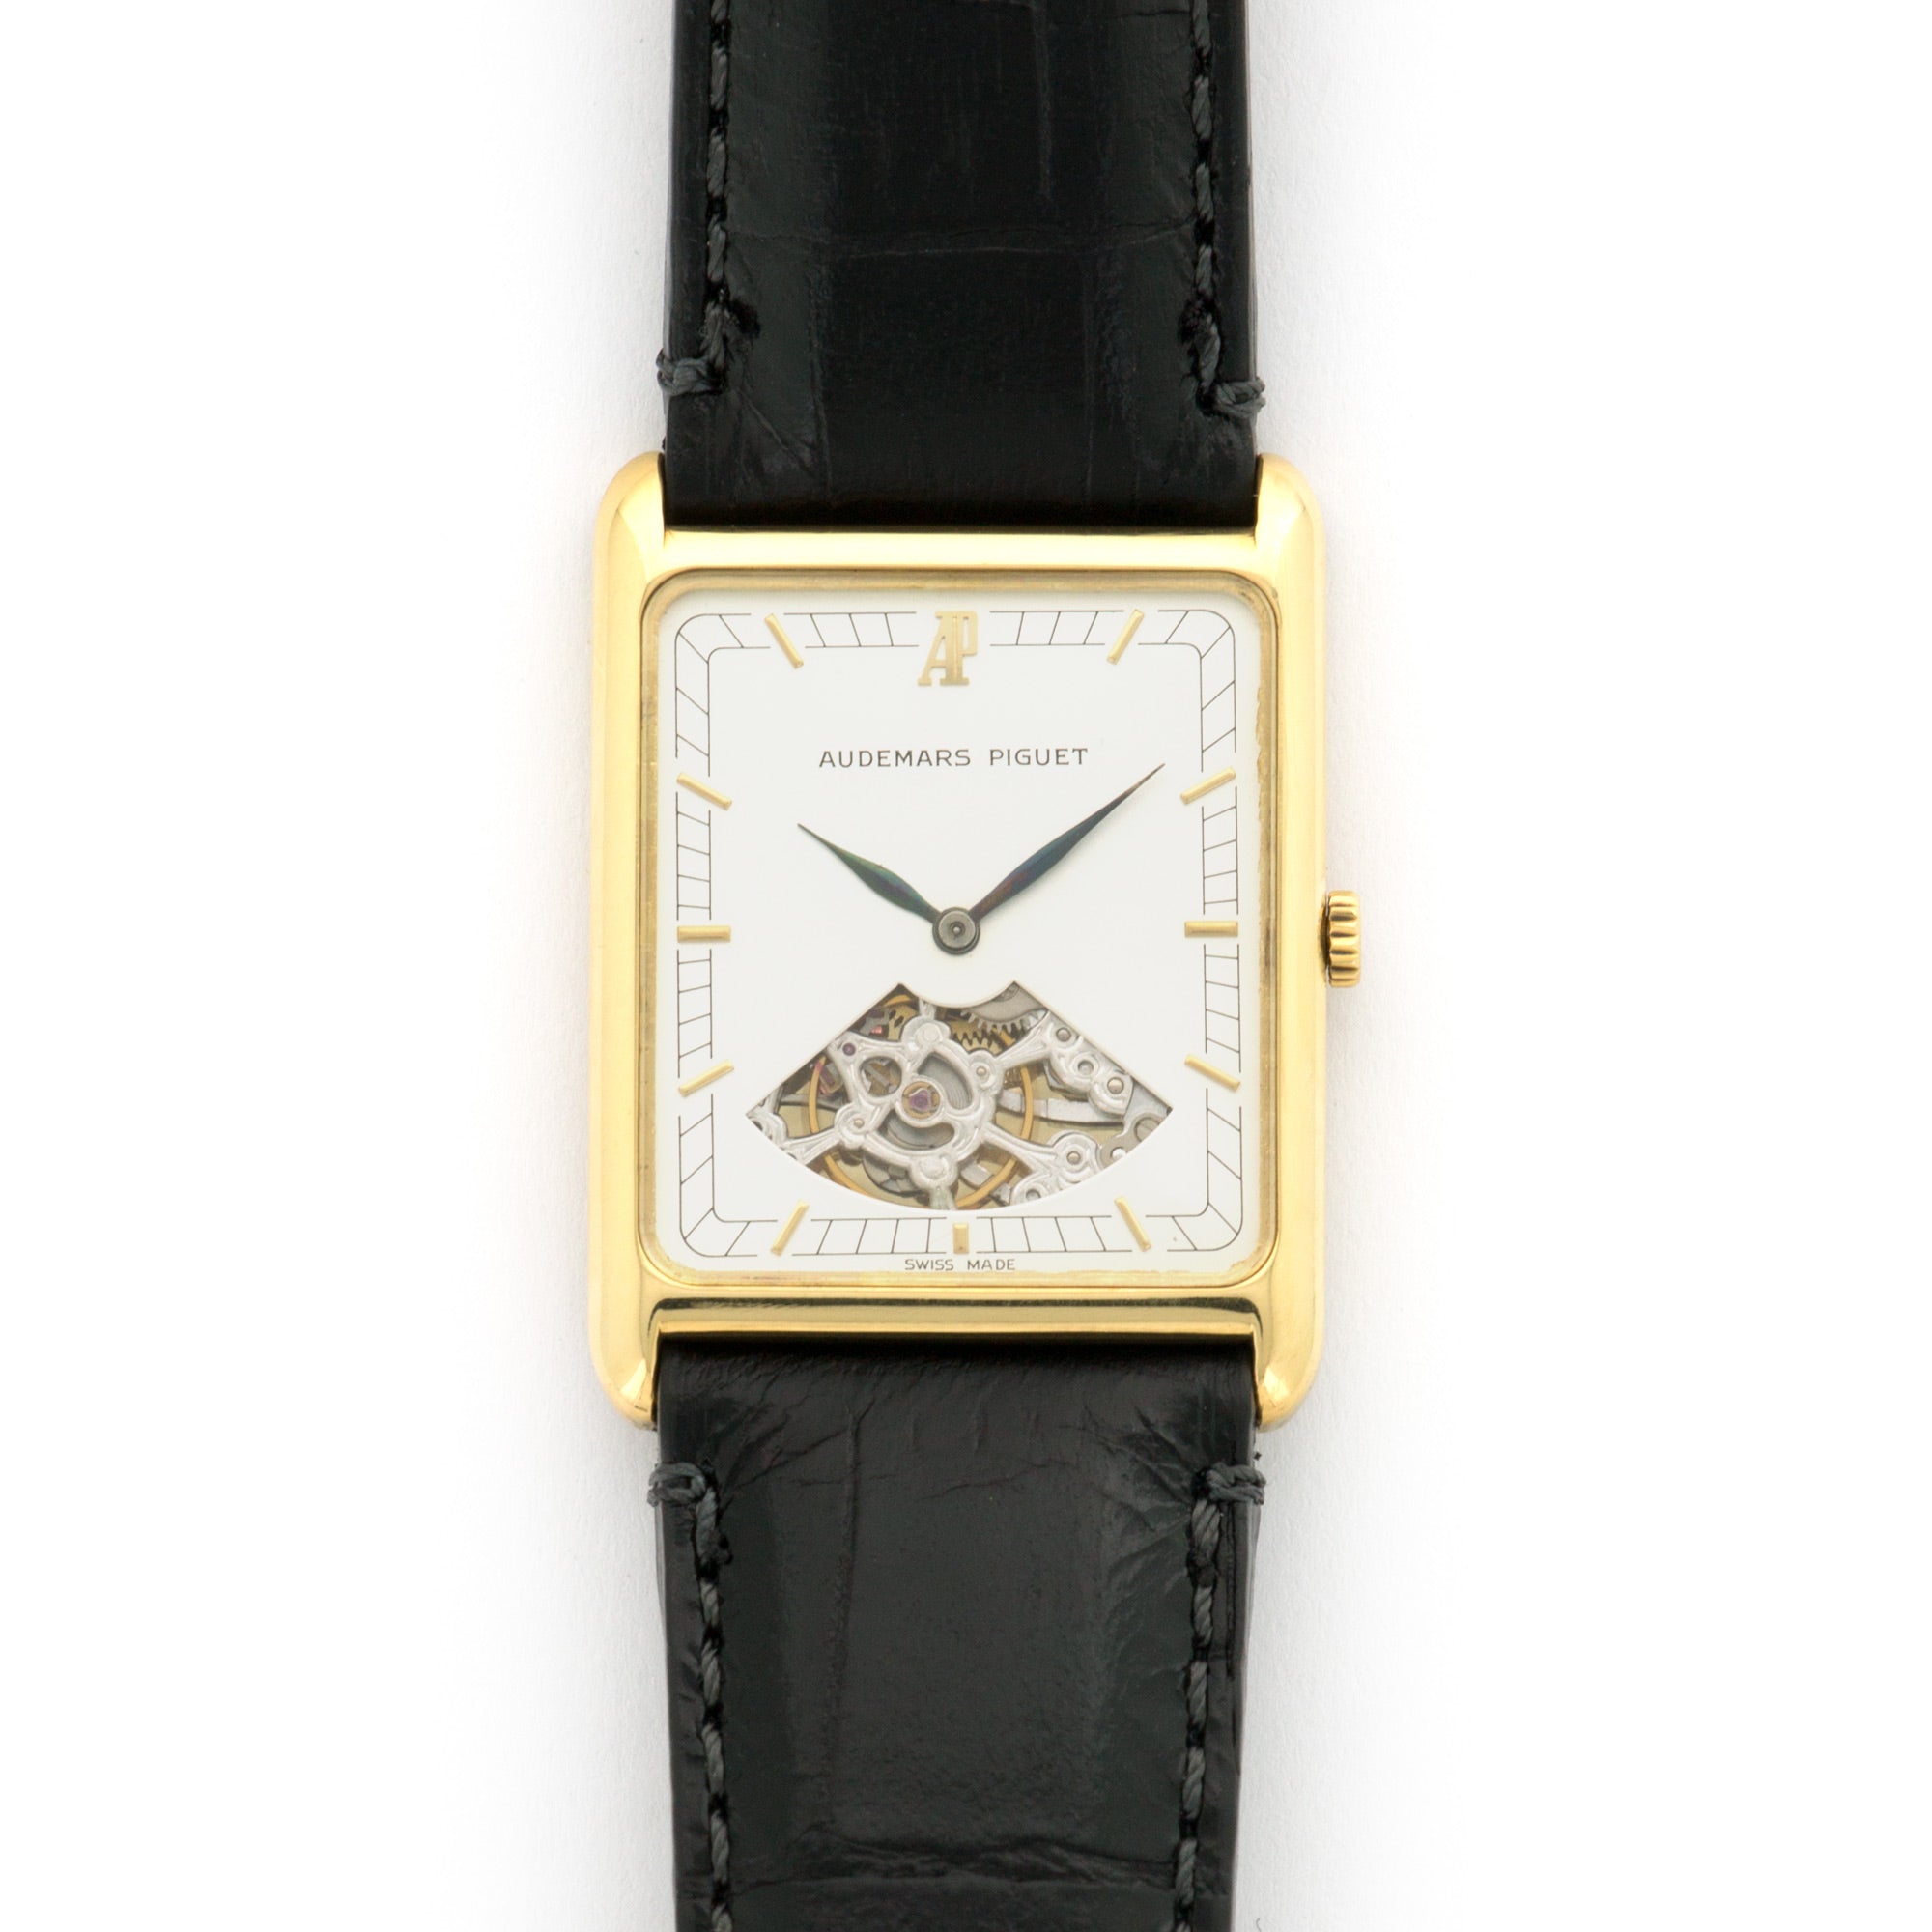 Audemars Piguet - Audemars Piguet Yellow Gold Skeleton Watch Ref. 14529 - The Keystone Watches